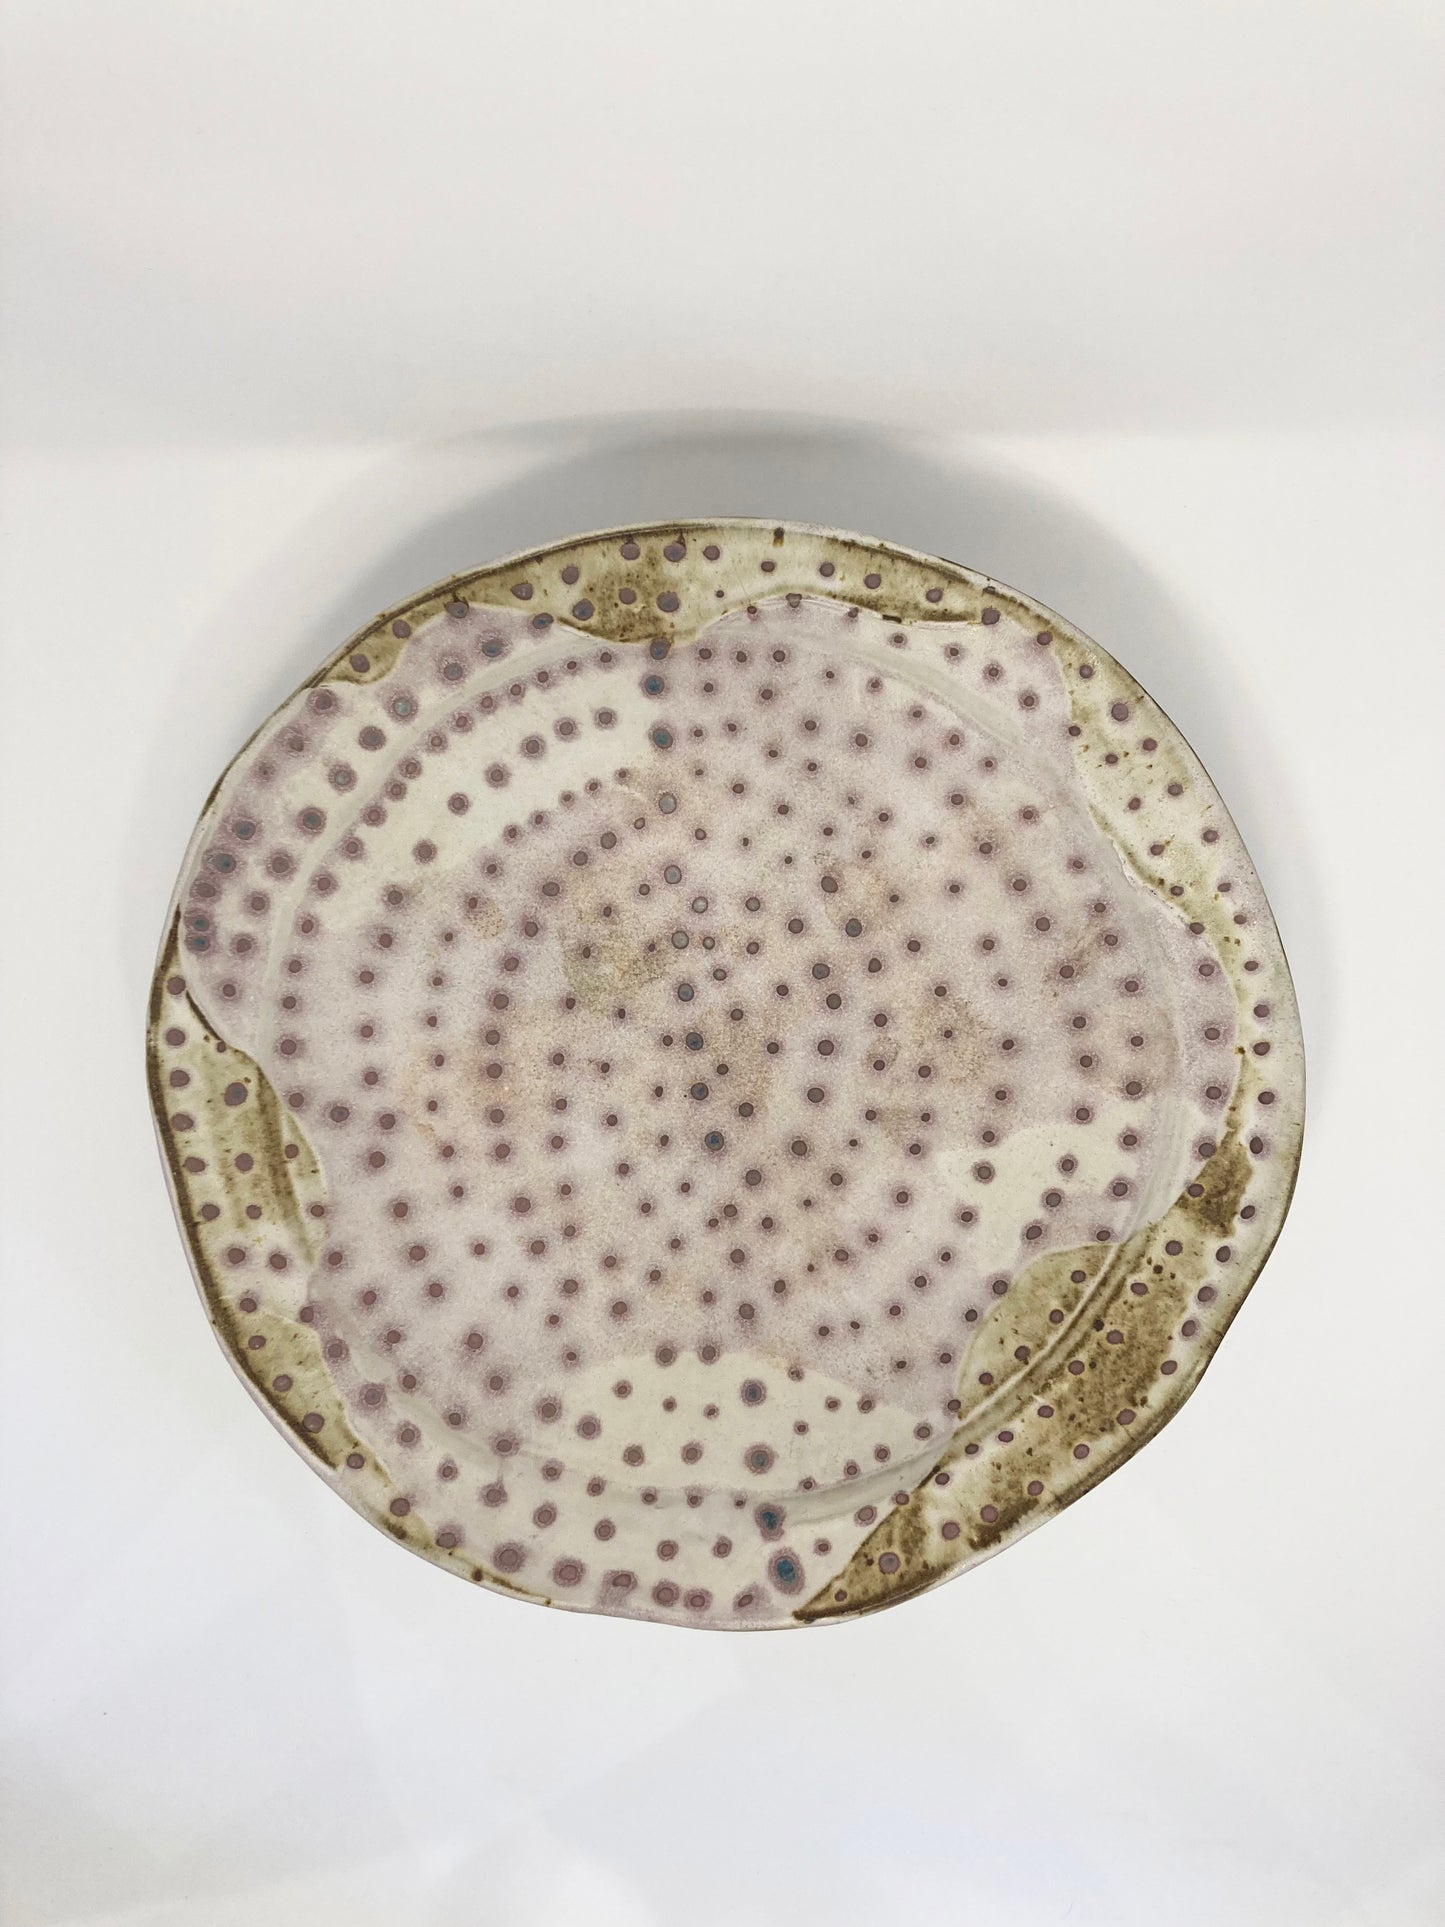 Nora Zamichow - Giant Pink dot bowl